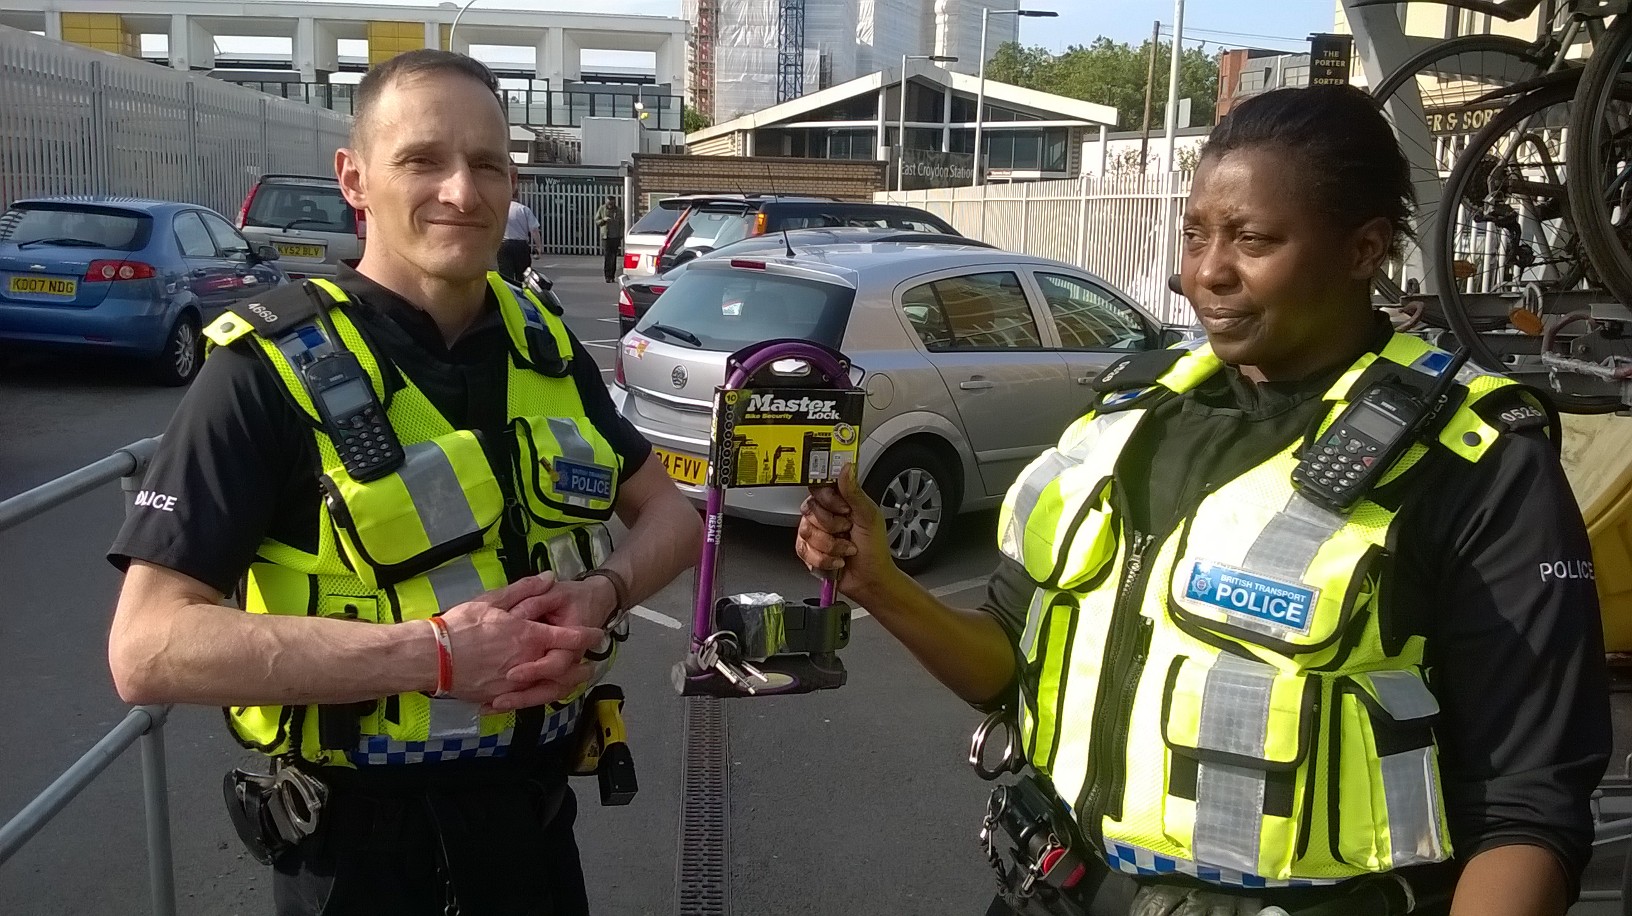 UK Police Giving Away Free Gold Standard Bike Locks to Encourage Cycling